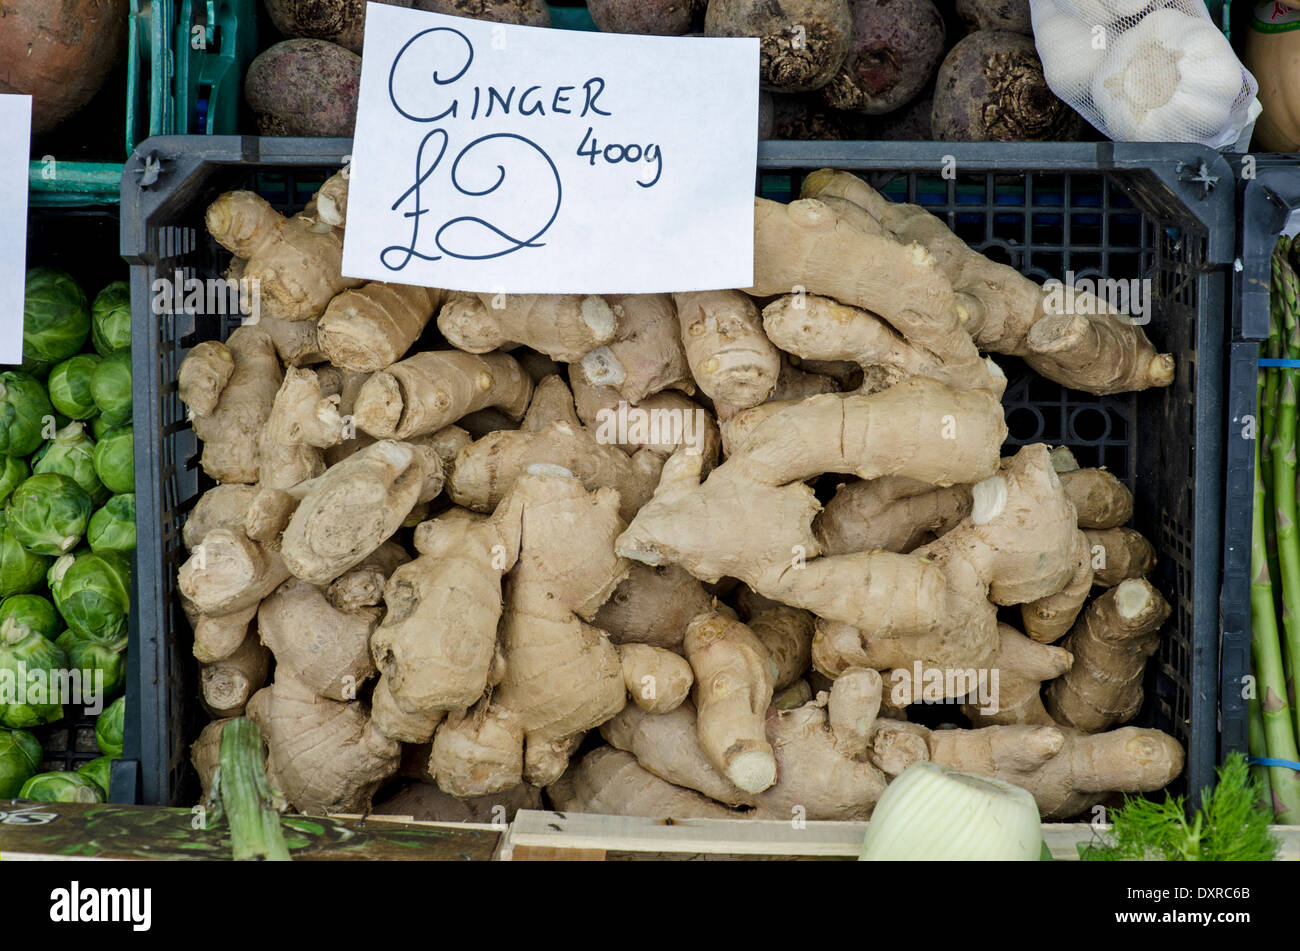 Ginger for sale on an outdoor market stall in the Grassmarket, Edinburgh. Stock Photo